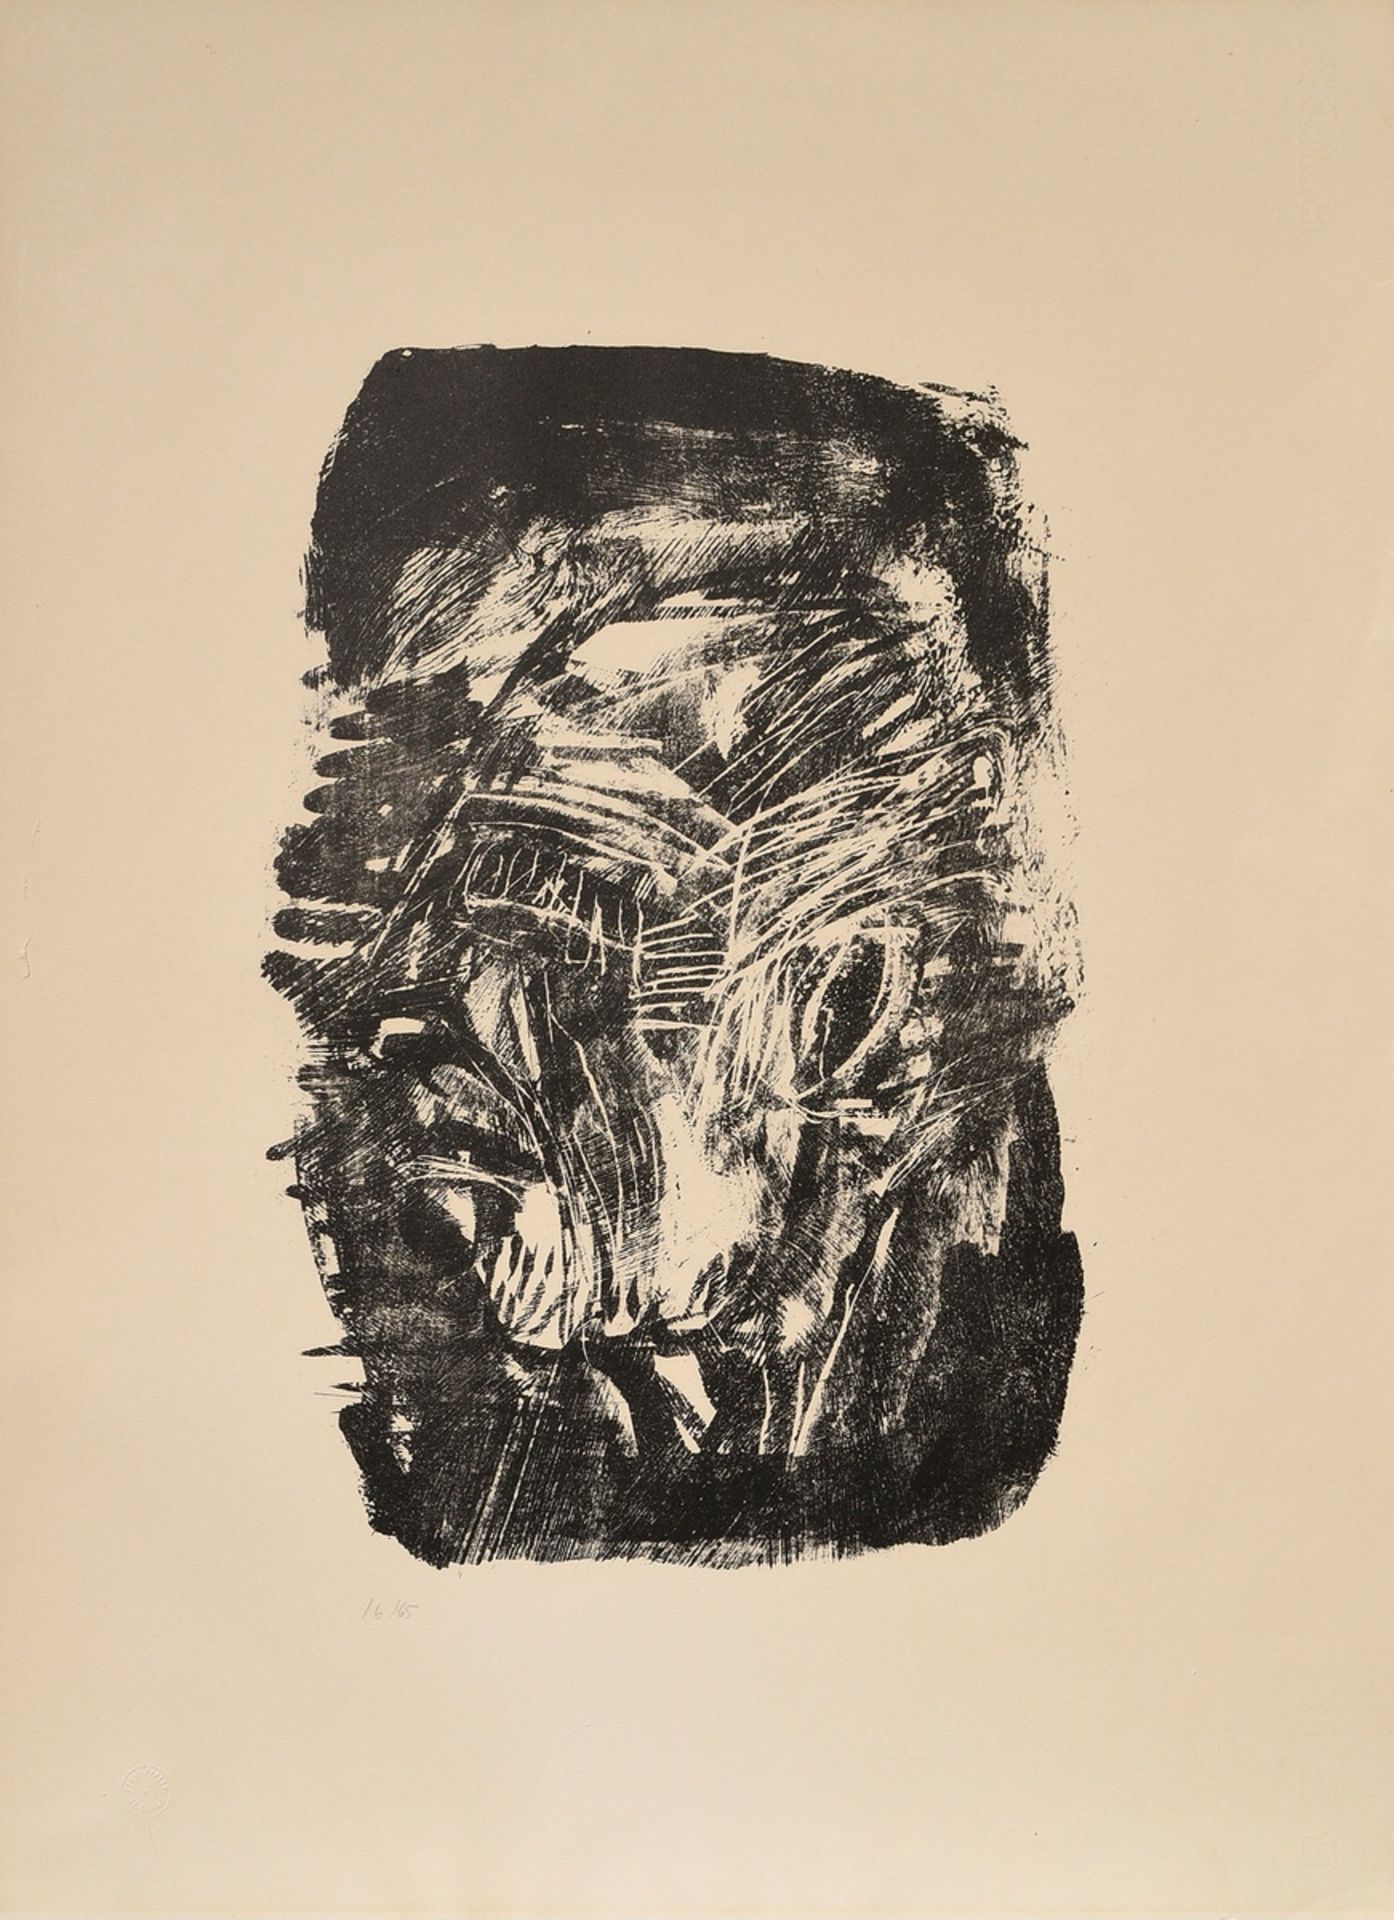 Dix, Otto (1891-1969) 'Self-Portrait I' 1969, lithograph, 16/65, num., verso estate stamp and sign. - Image 2 of 4